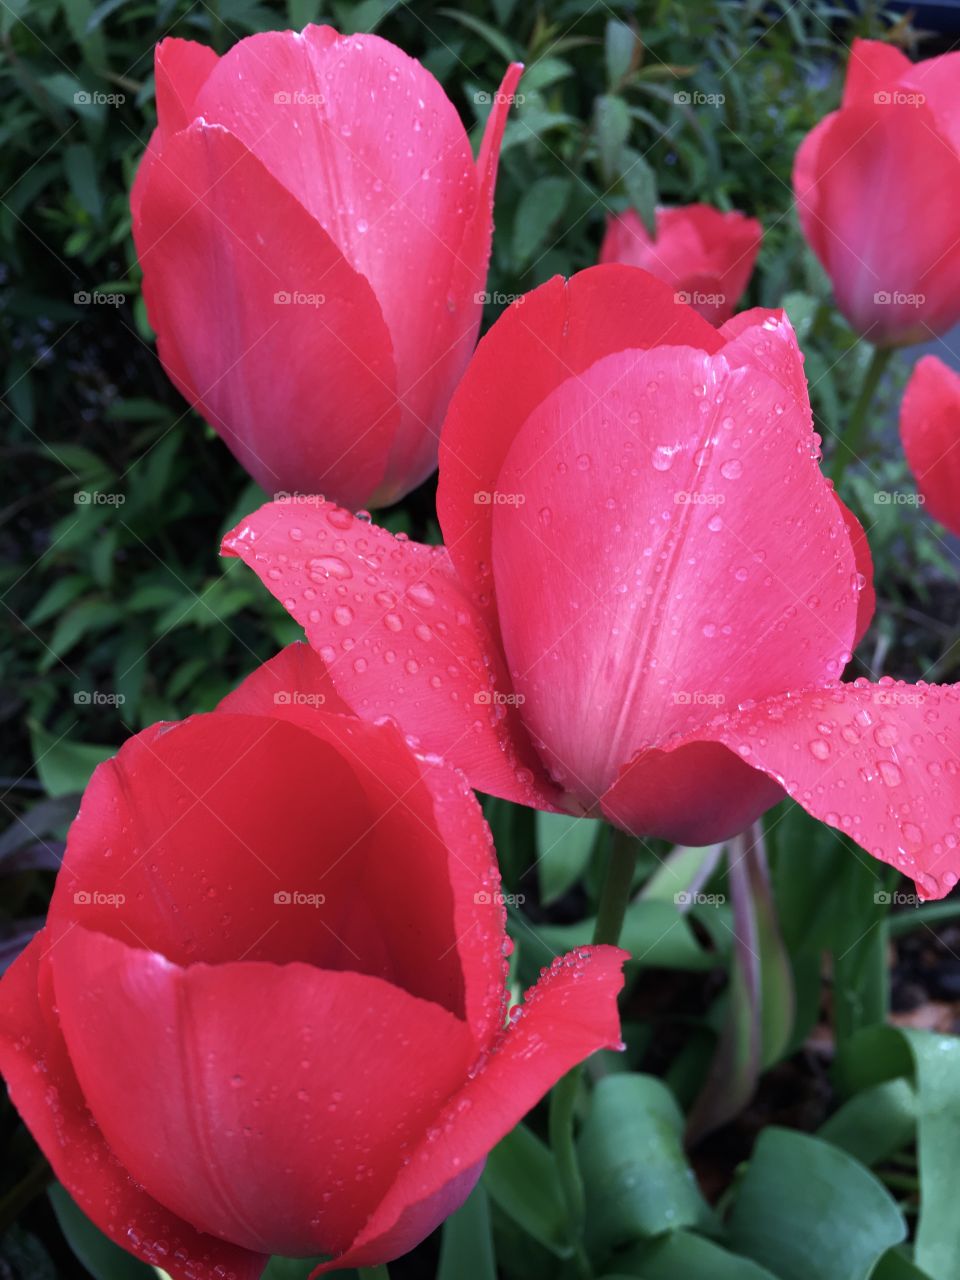 Pink tulips in the rain